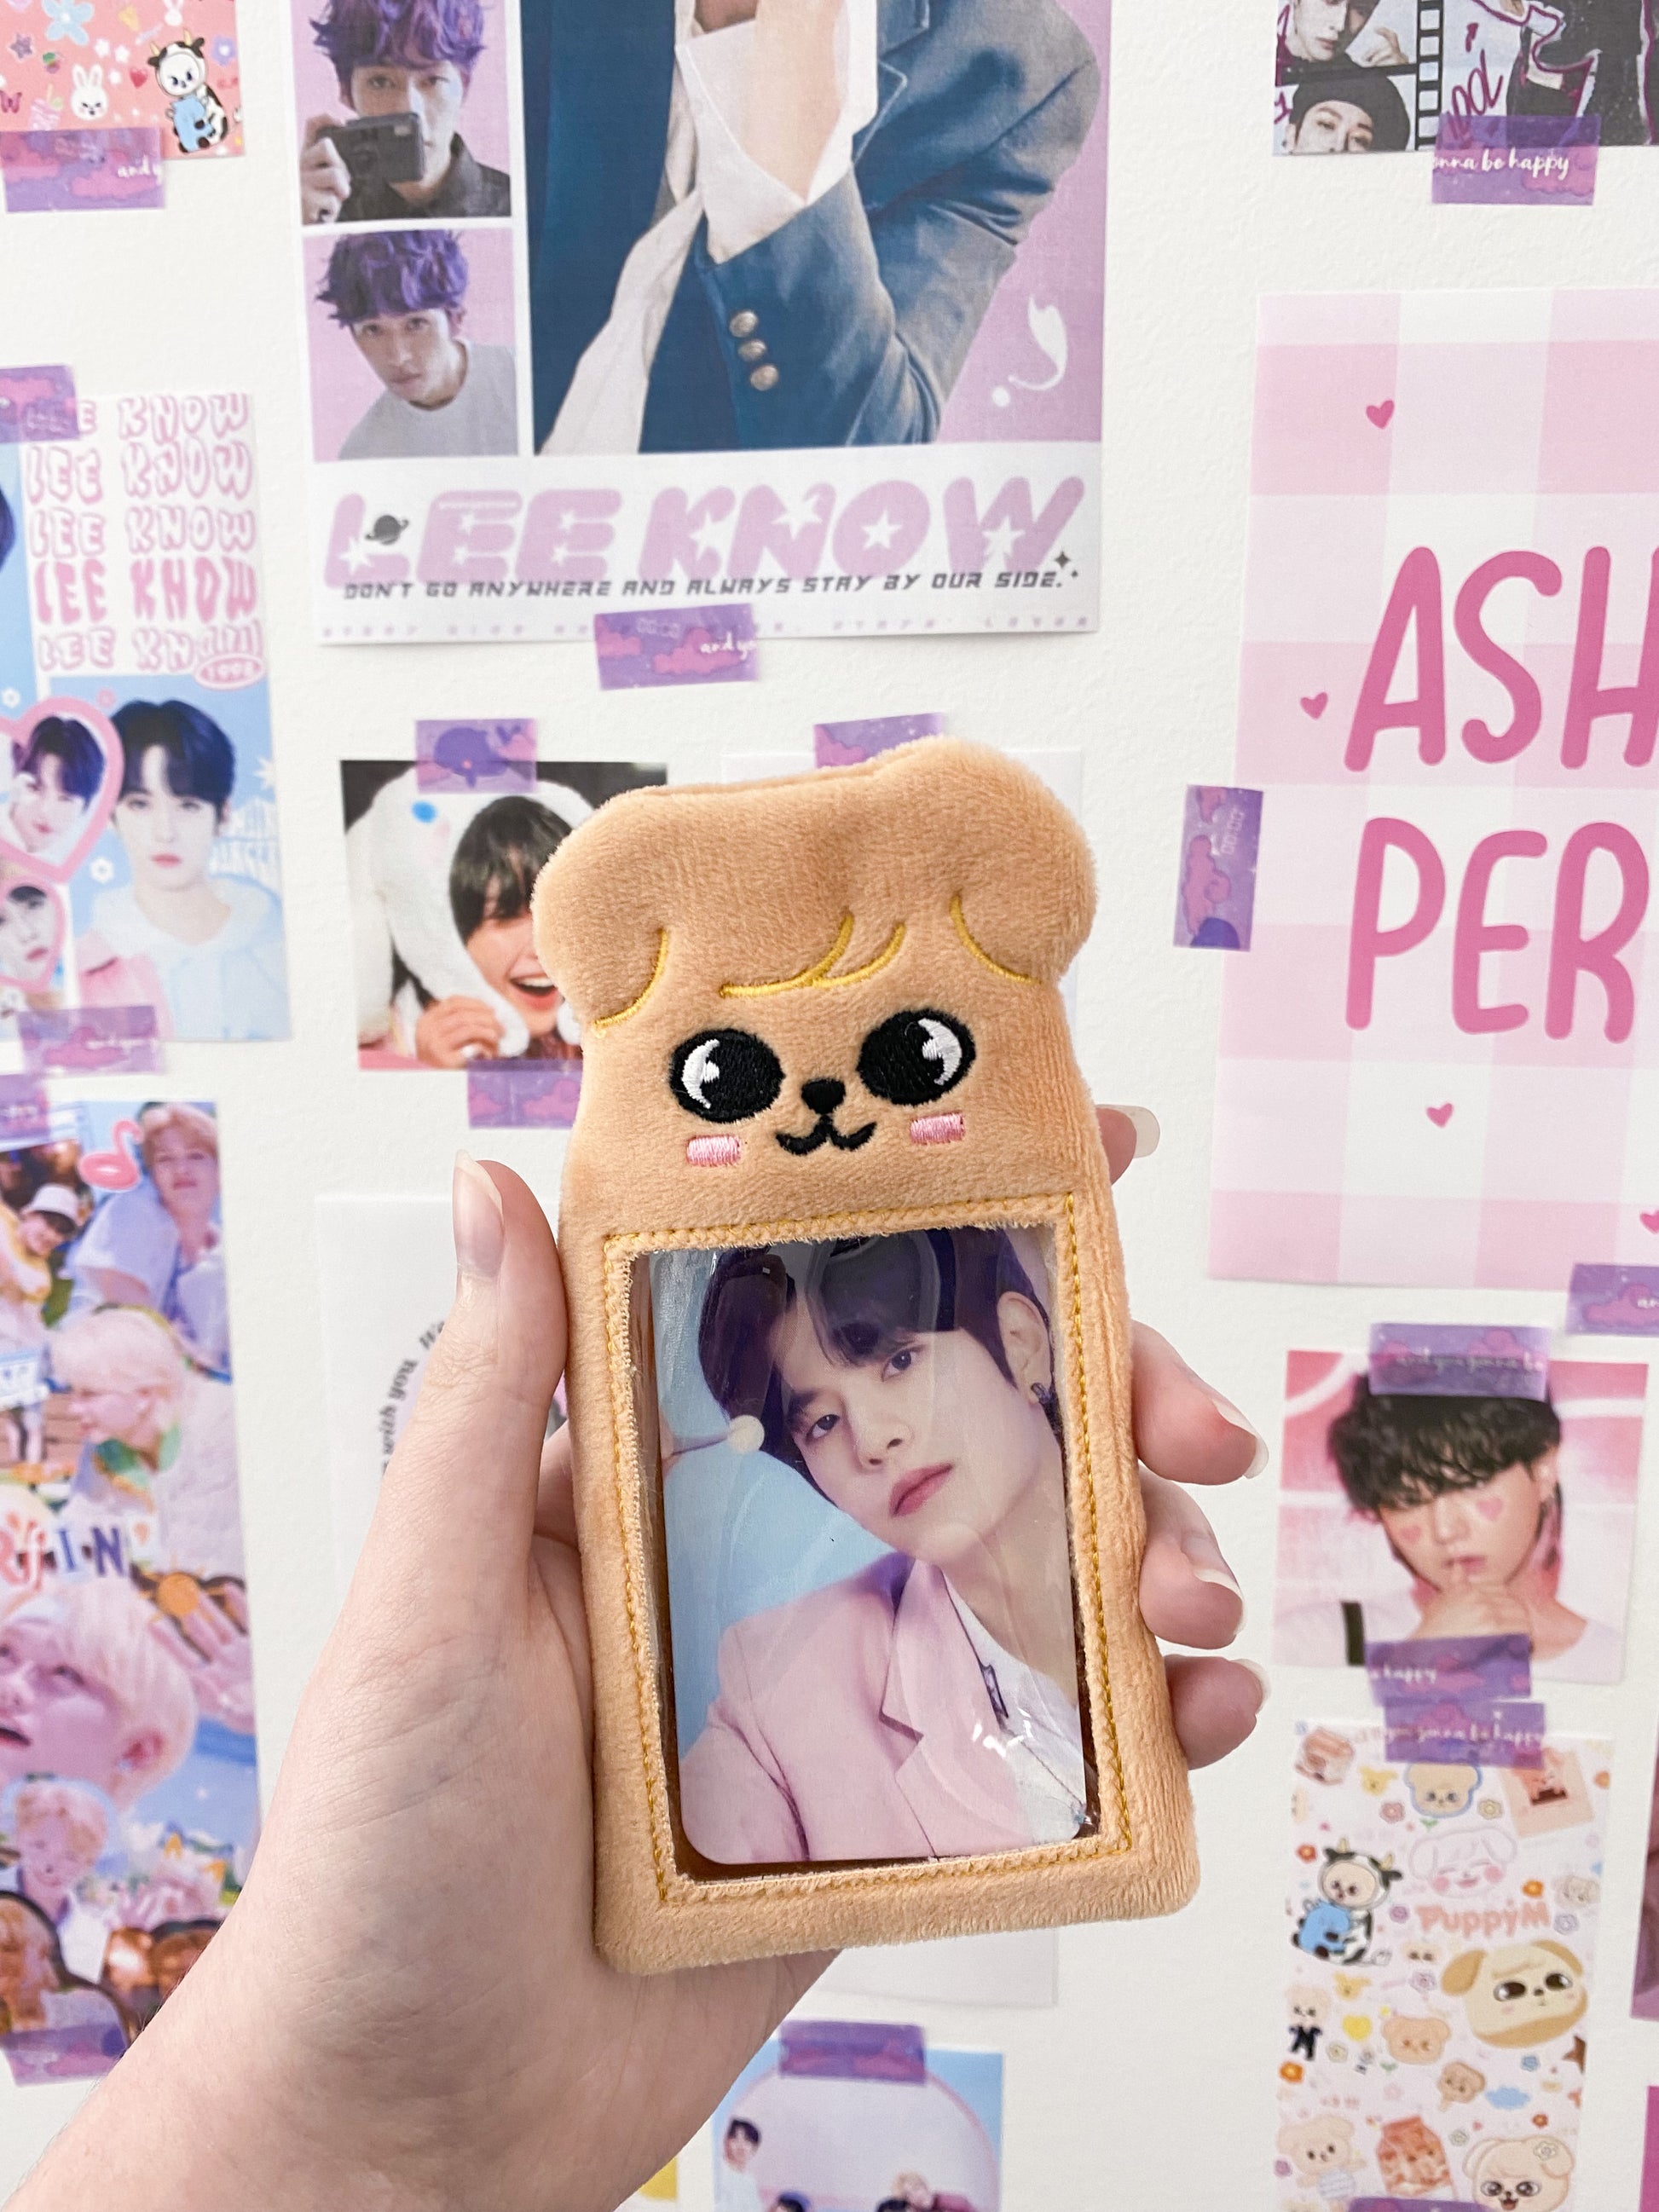 Emotional Support Kpop Idol Photocard Holder – ashleyspersona